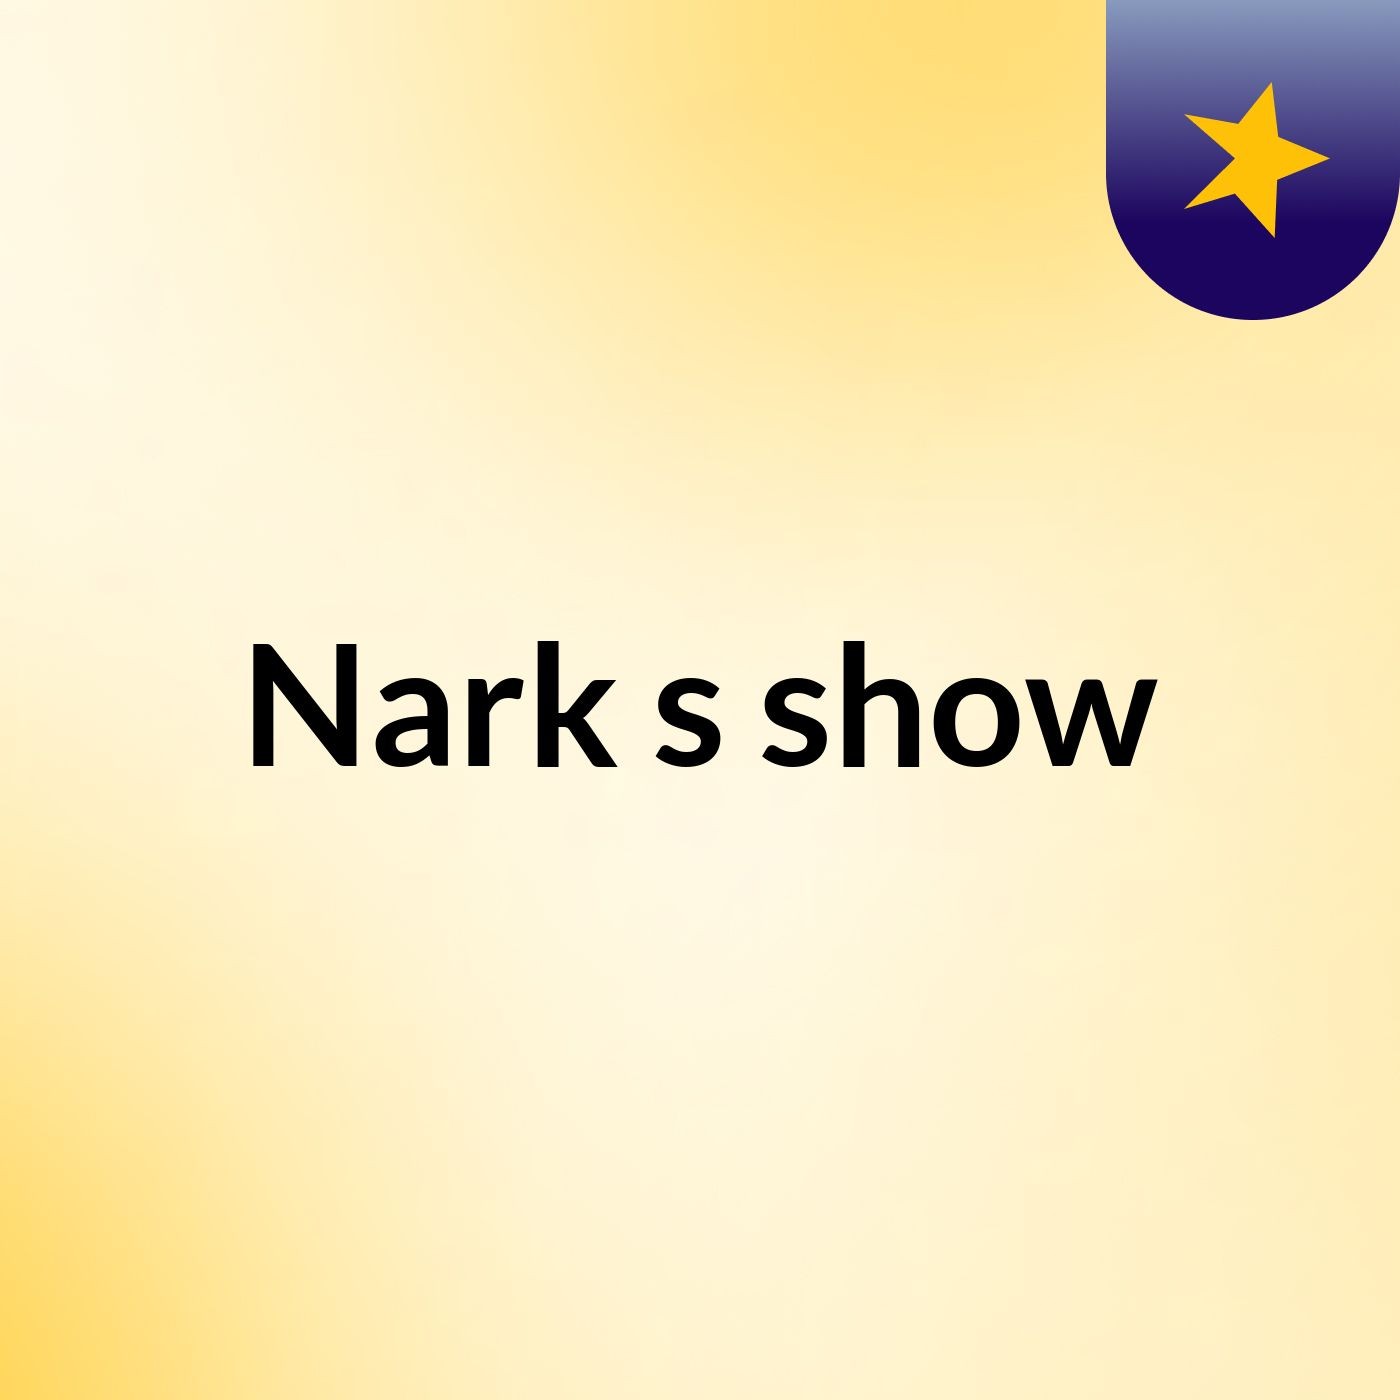 Nark's show